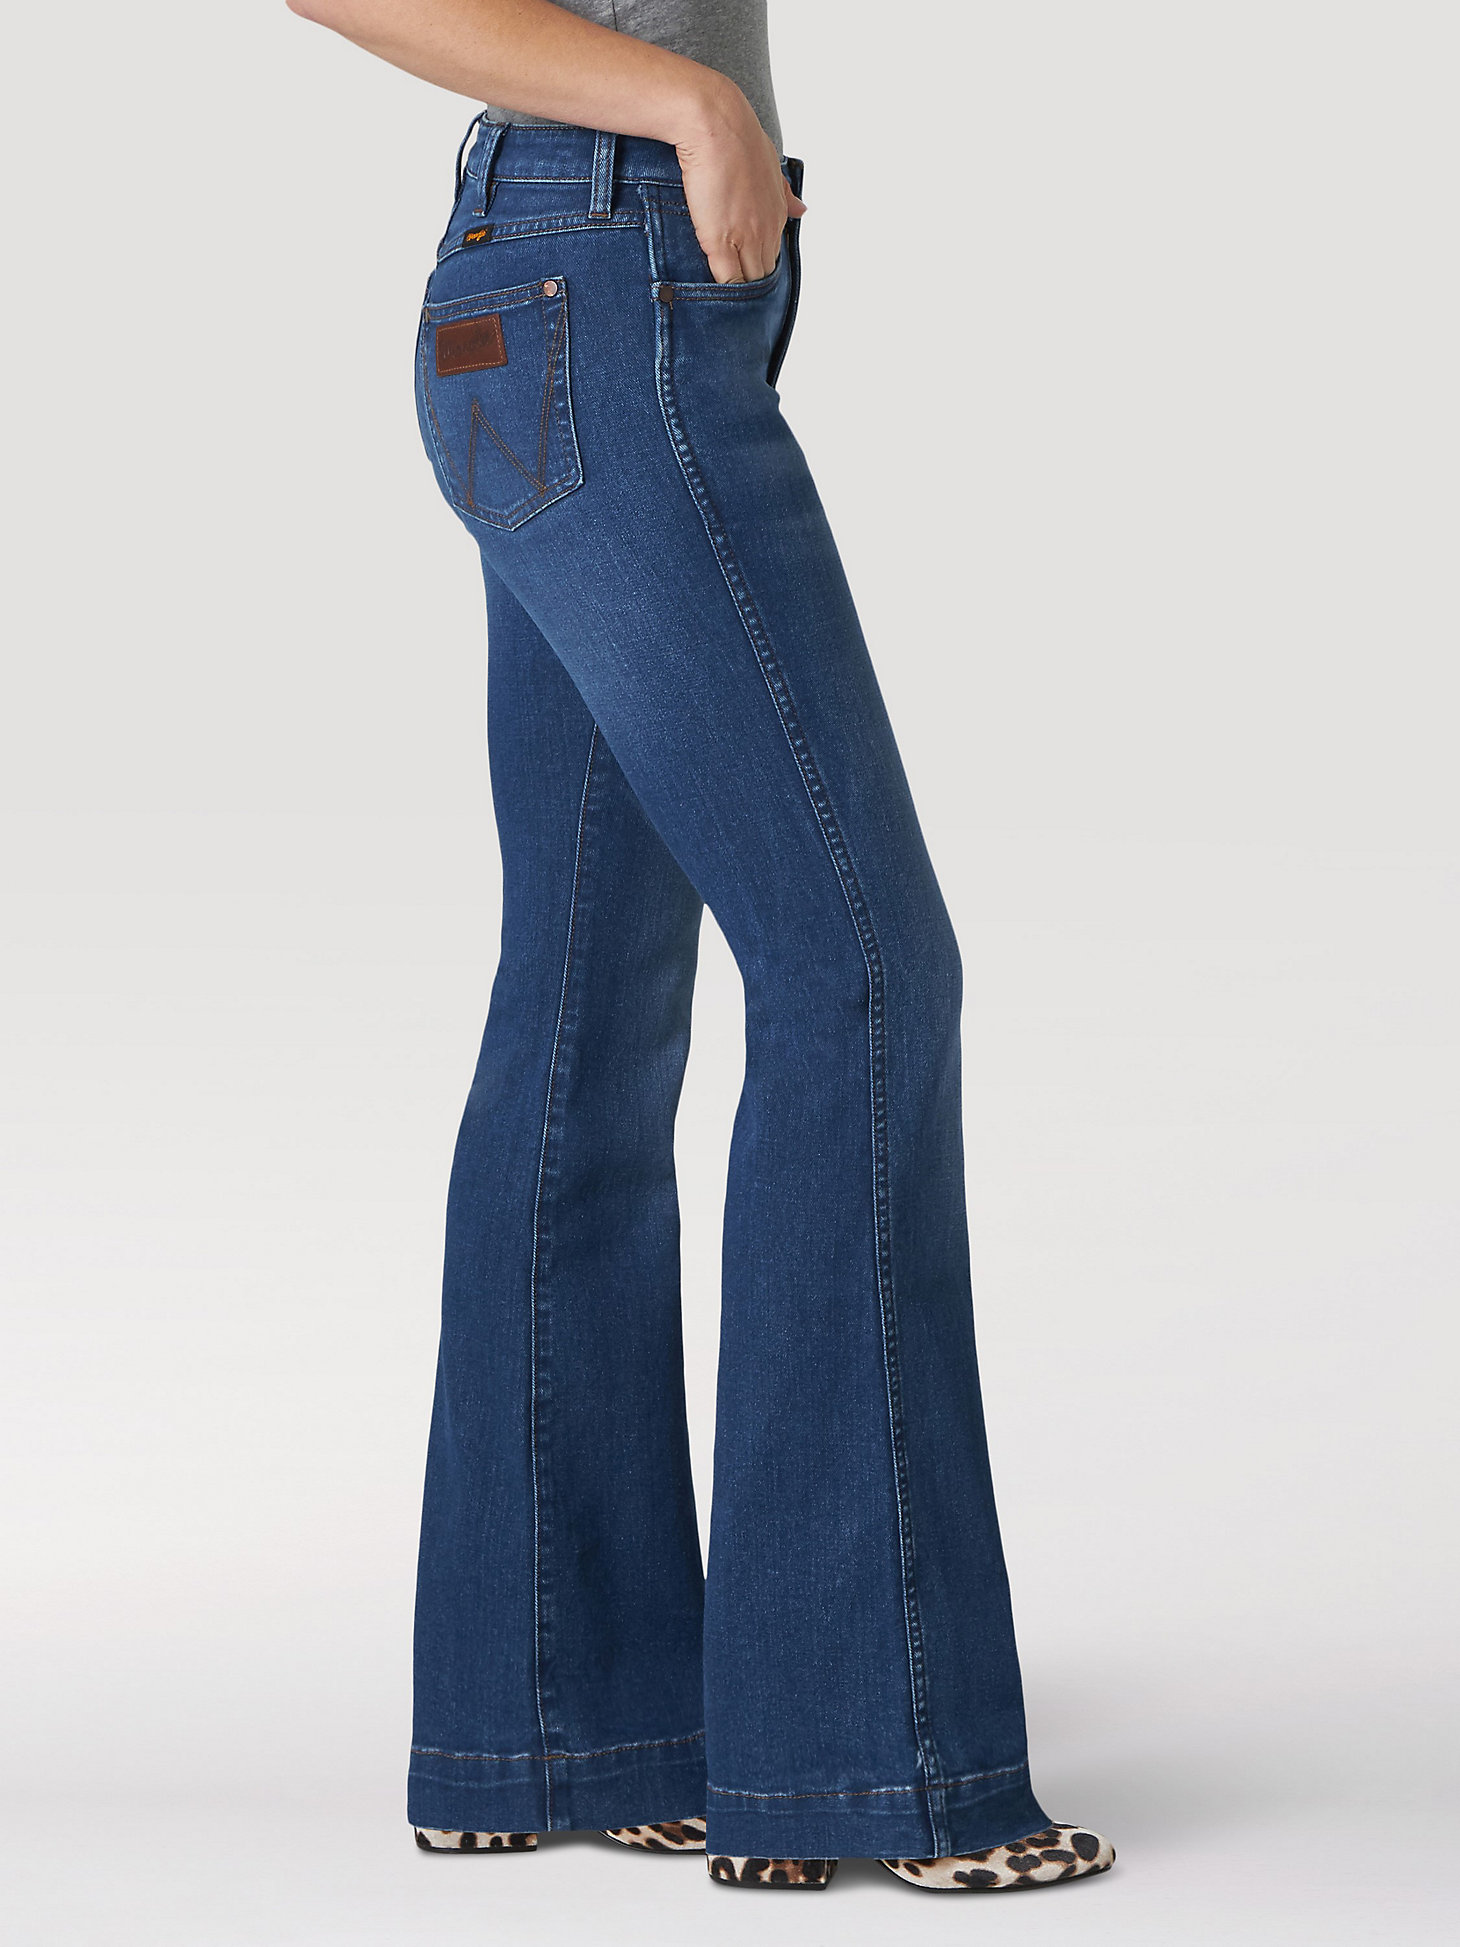 Women's Wrangler Retro® High Rise Trouser Jean in Blair alternative view 2